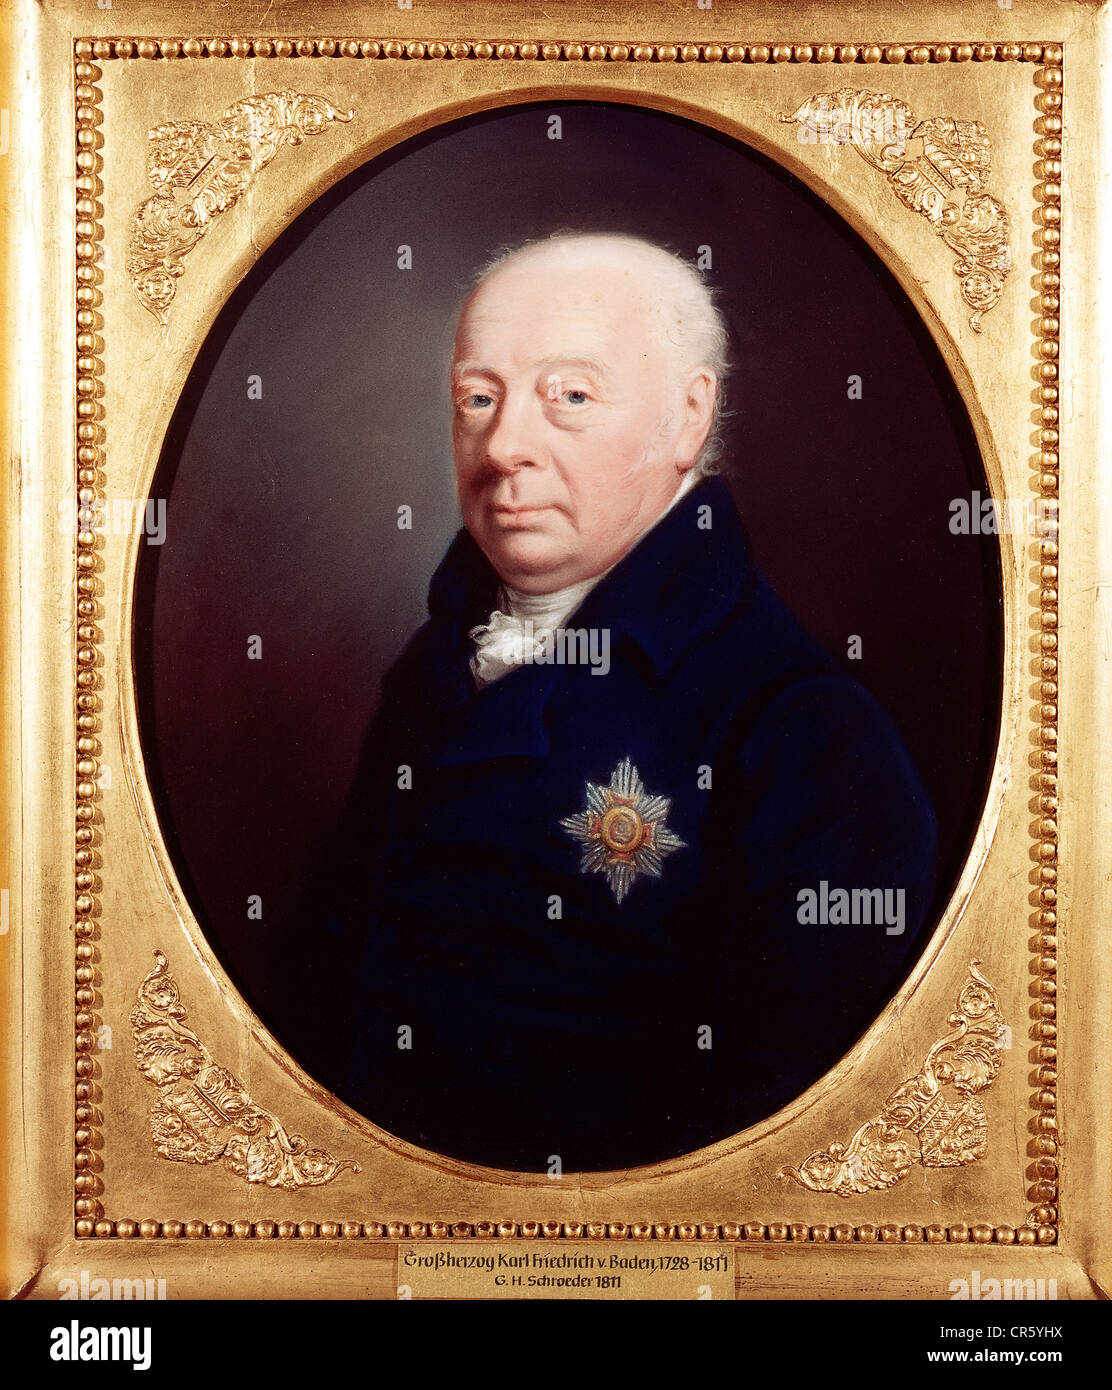 Charles Frederick, 22.11.1728 - 10.6.1811, Grand Duke of Baden 1806 - 1811, portrait, painting by G. H. Schroeder, 1811, New Castle Baden-Baden, Stock Photo